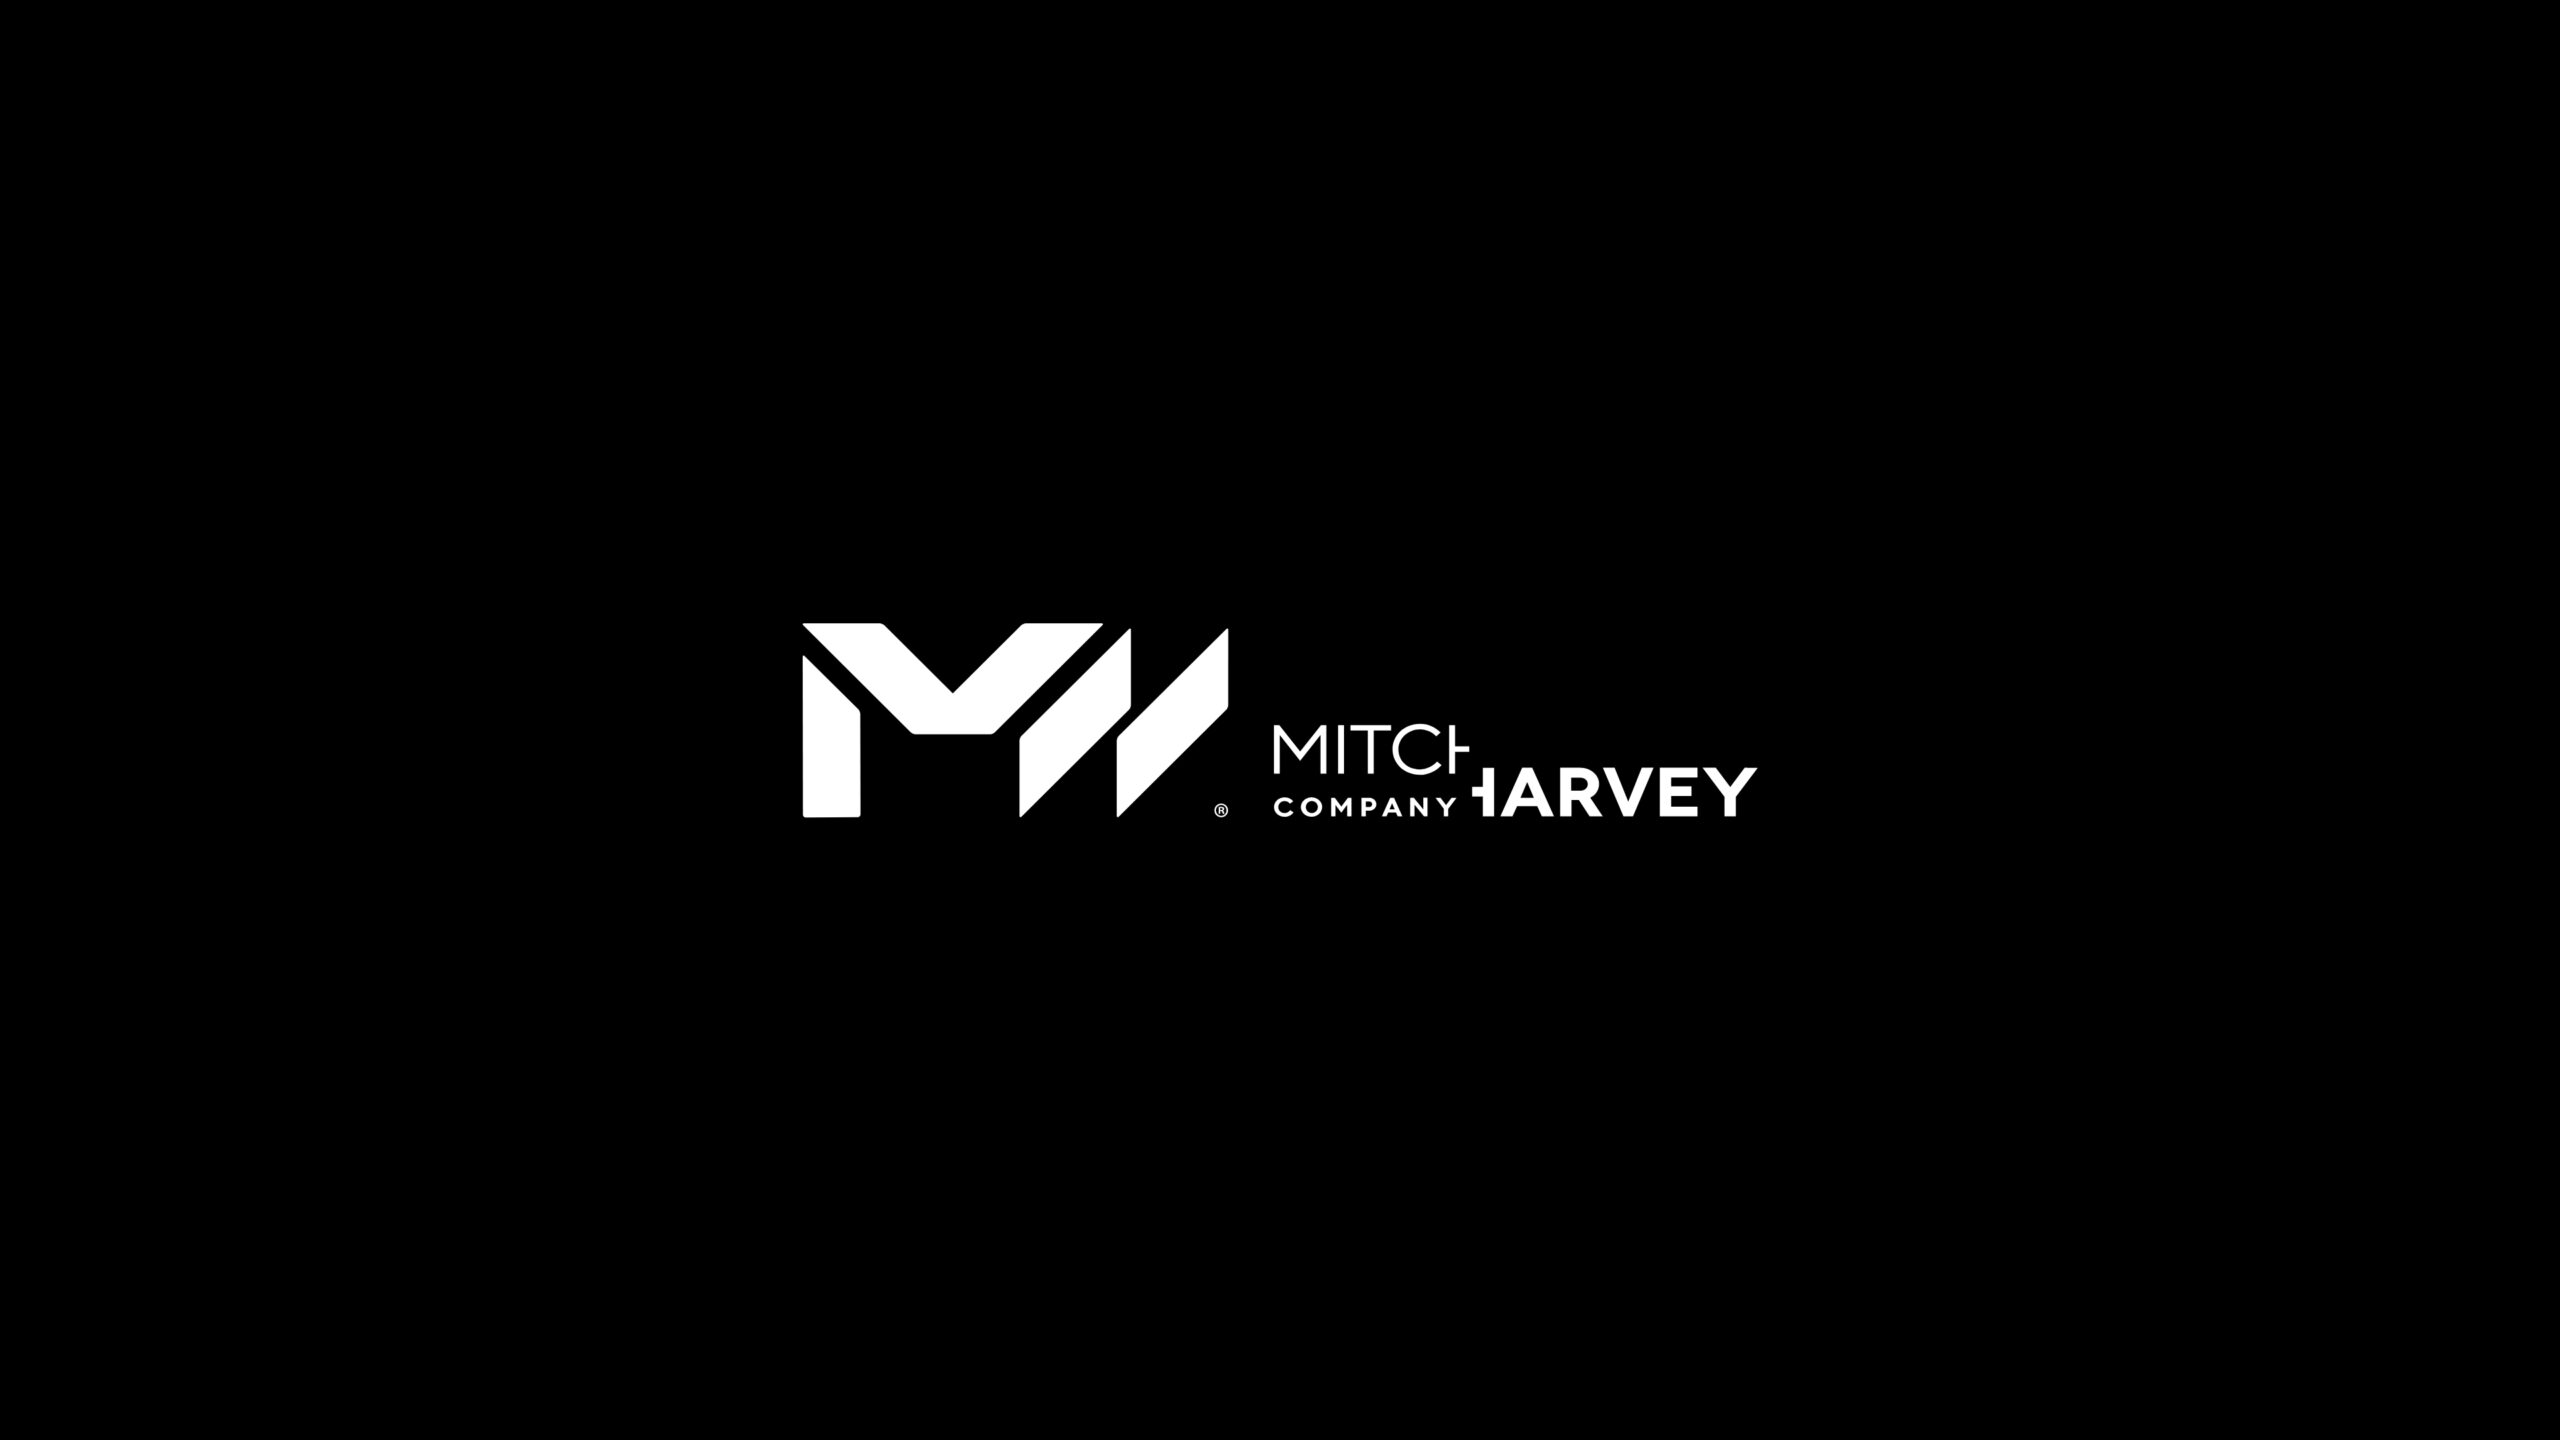 Mitch Harvey Contemporary Dance: Branding Design Development by TL Design Co.